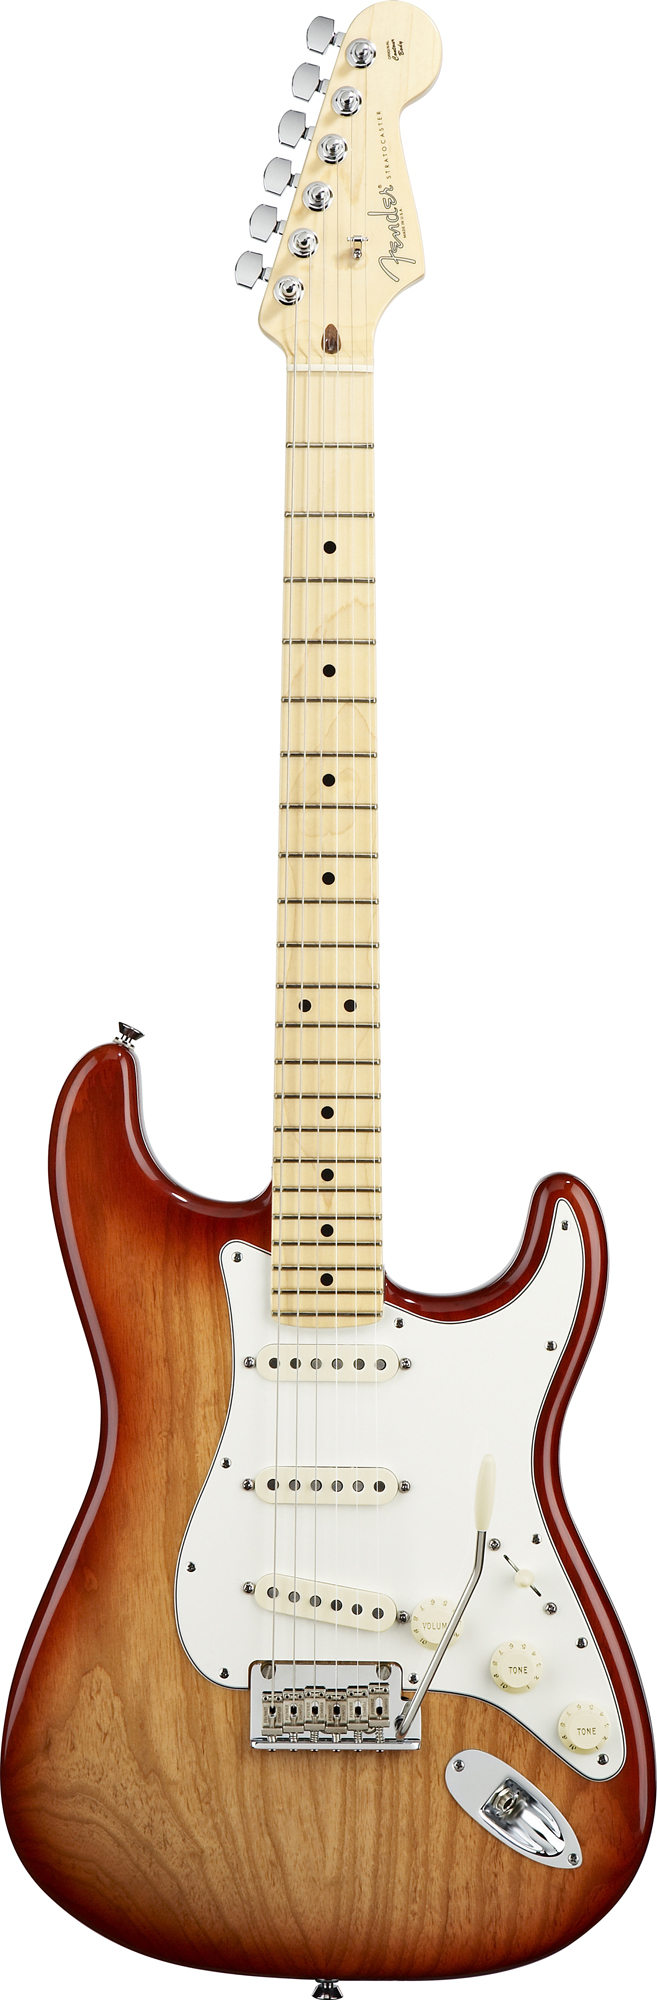 American Standard Stratocaster